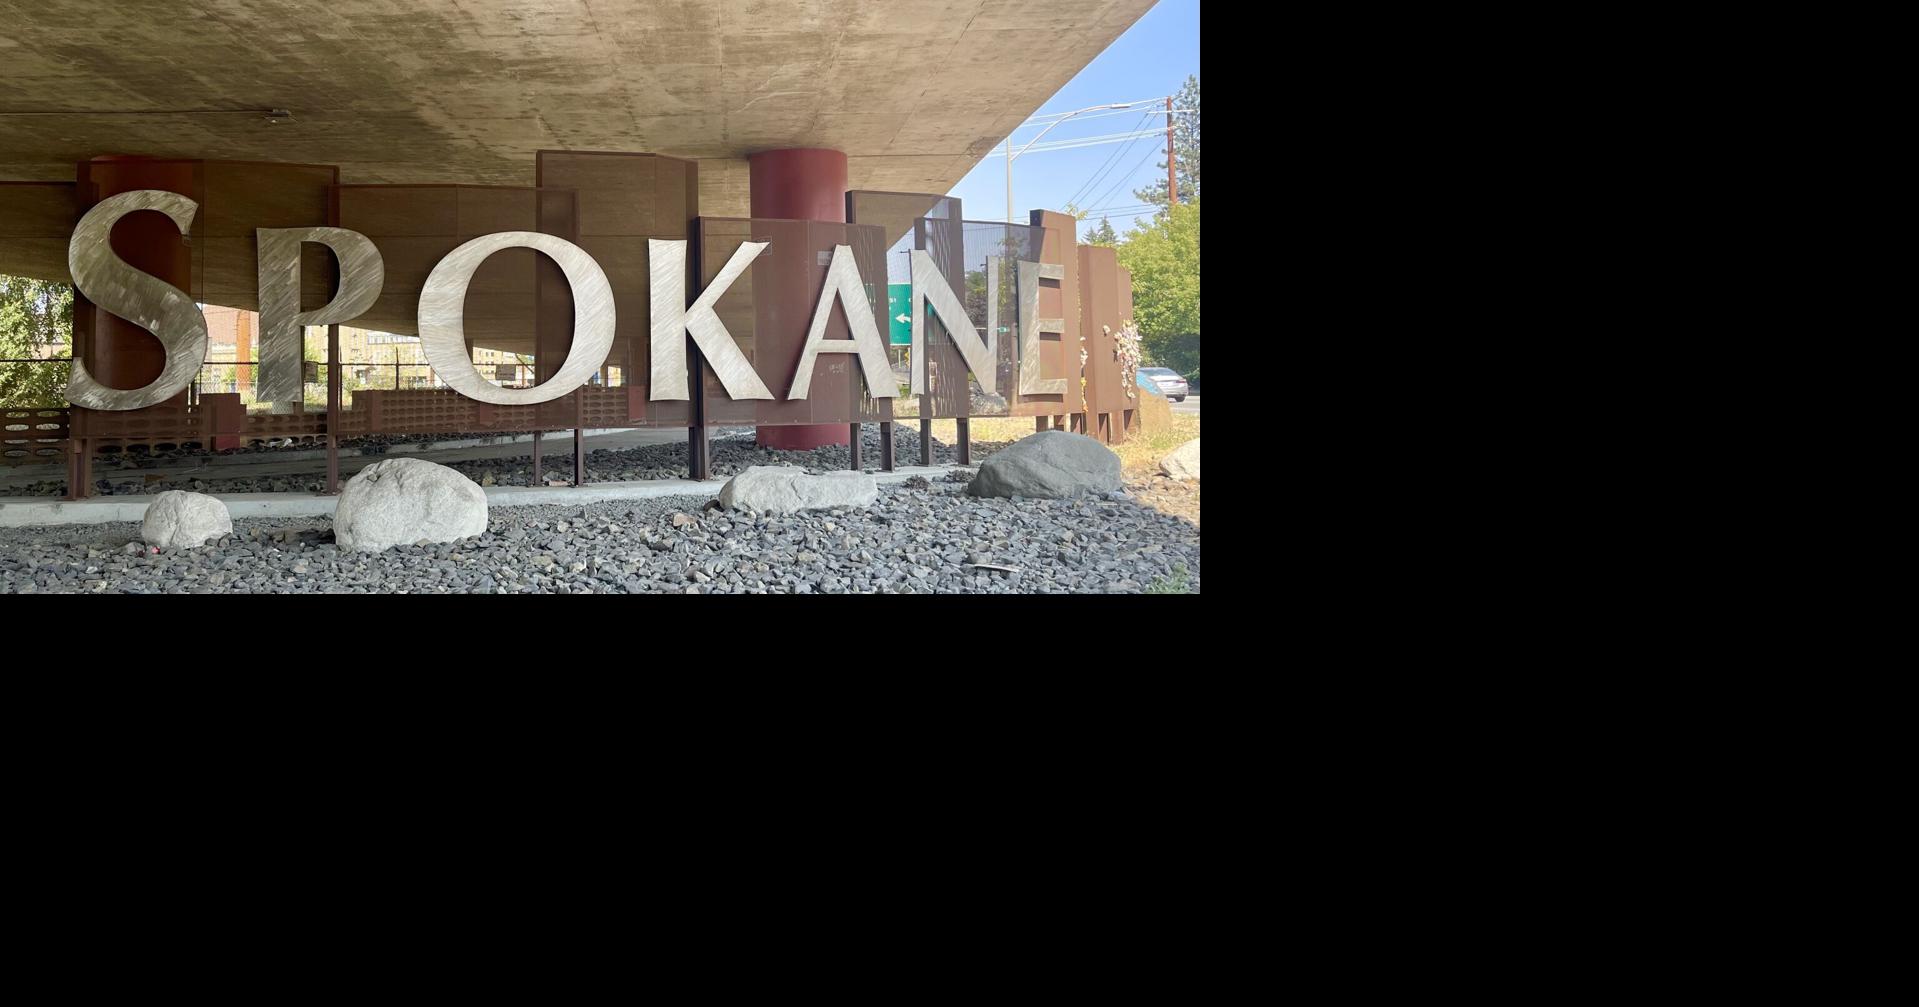 Spokane establishes procedures to recognize and implement neighborhood resolutions | News